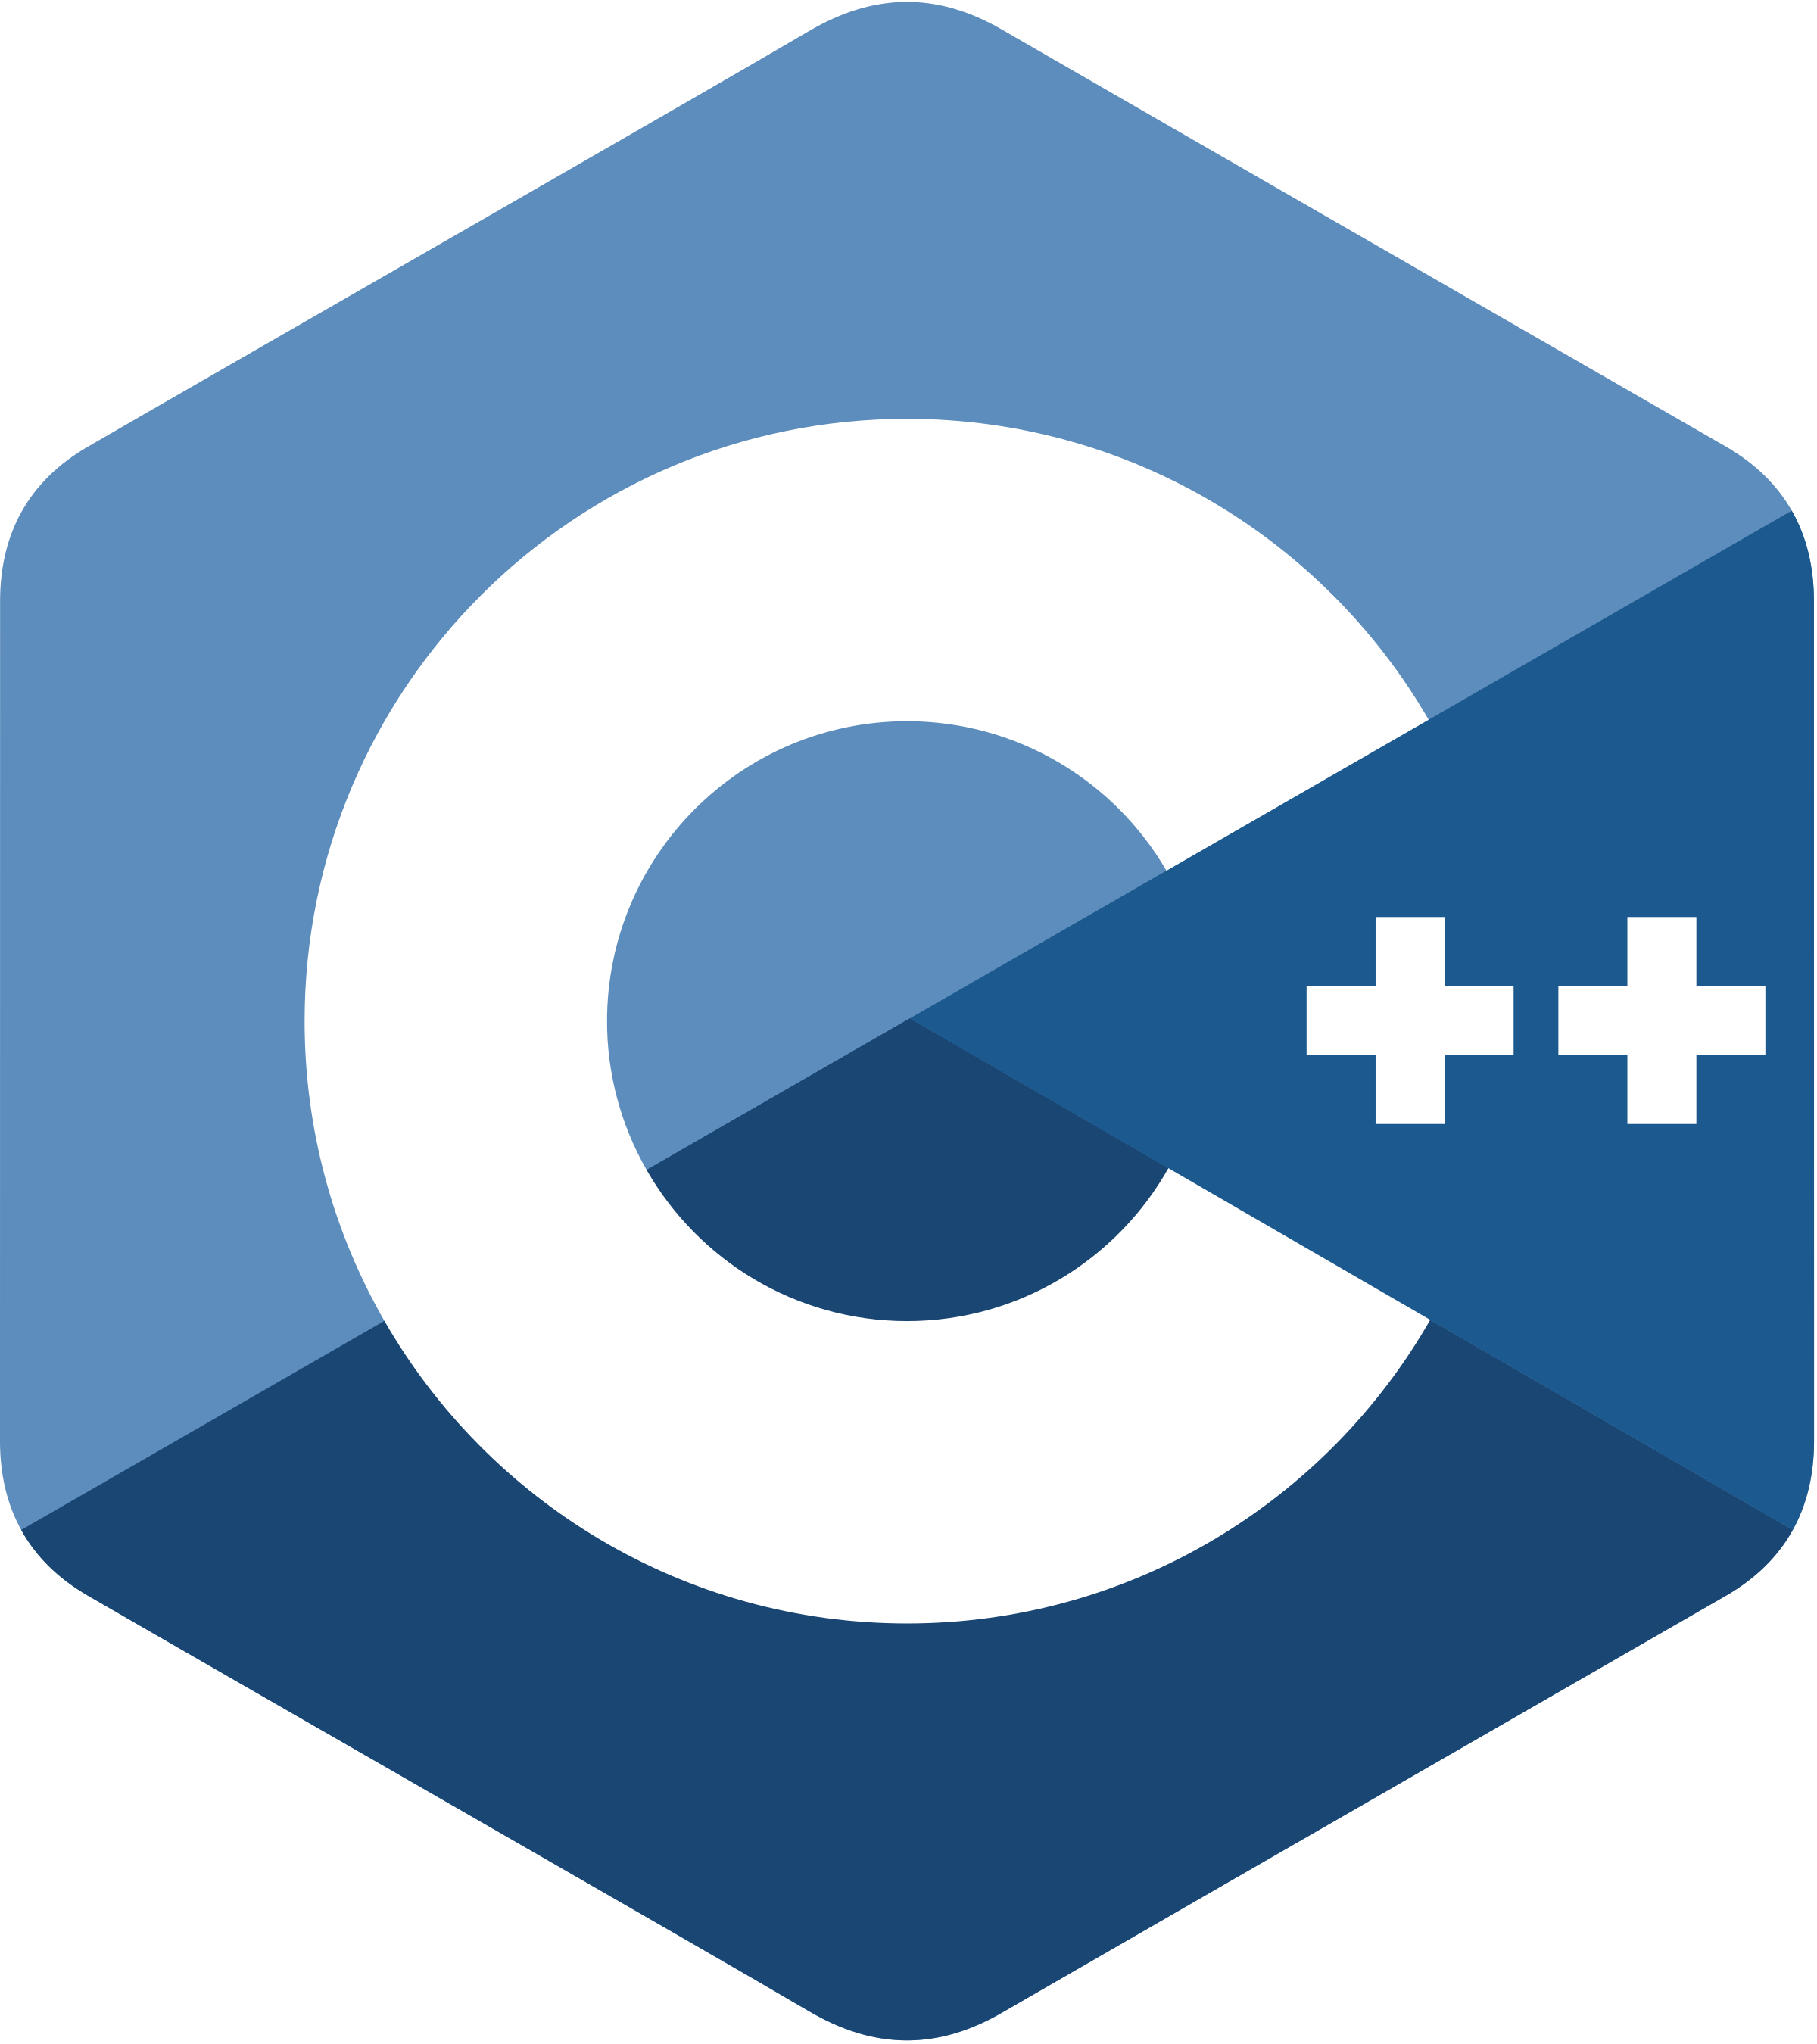 Cpp download. Логотип c Sharp. C Sharp языки программирования. C++ иконка. Язык программирования c++.